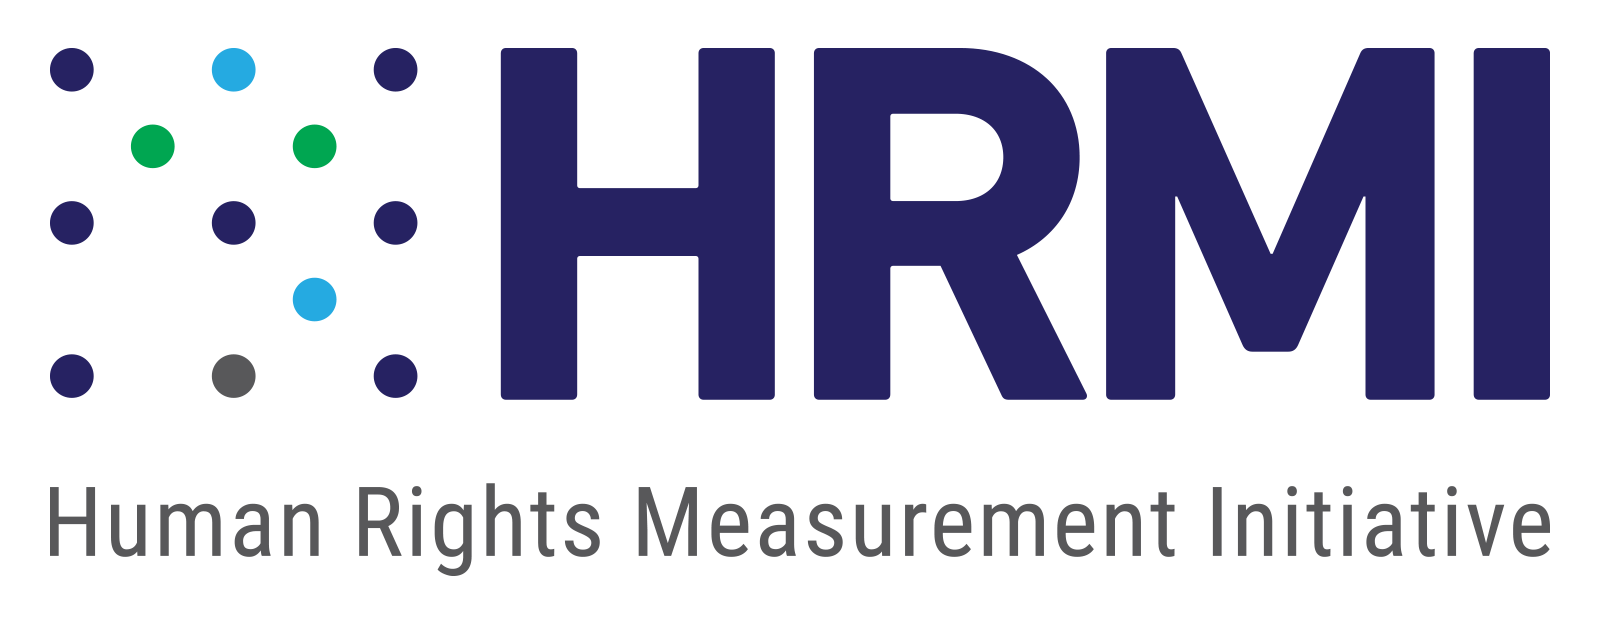 Human Rights Measurement Initiative HRMI